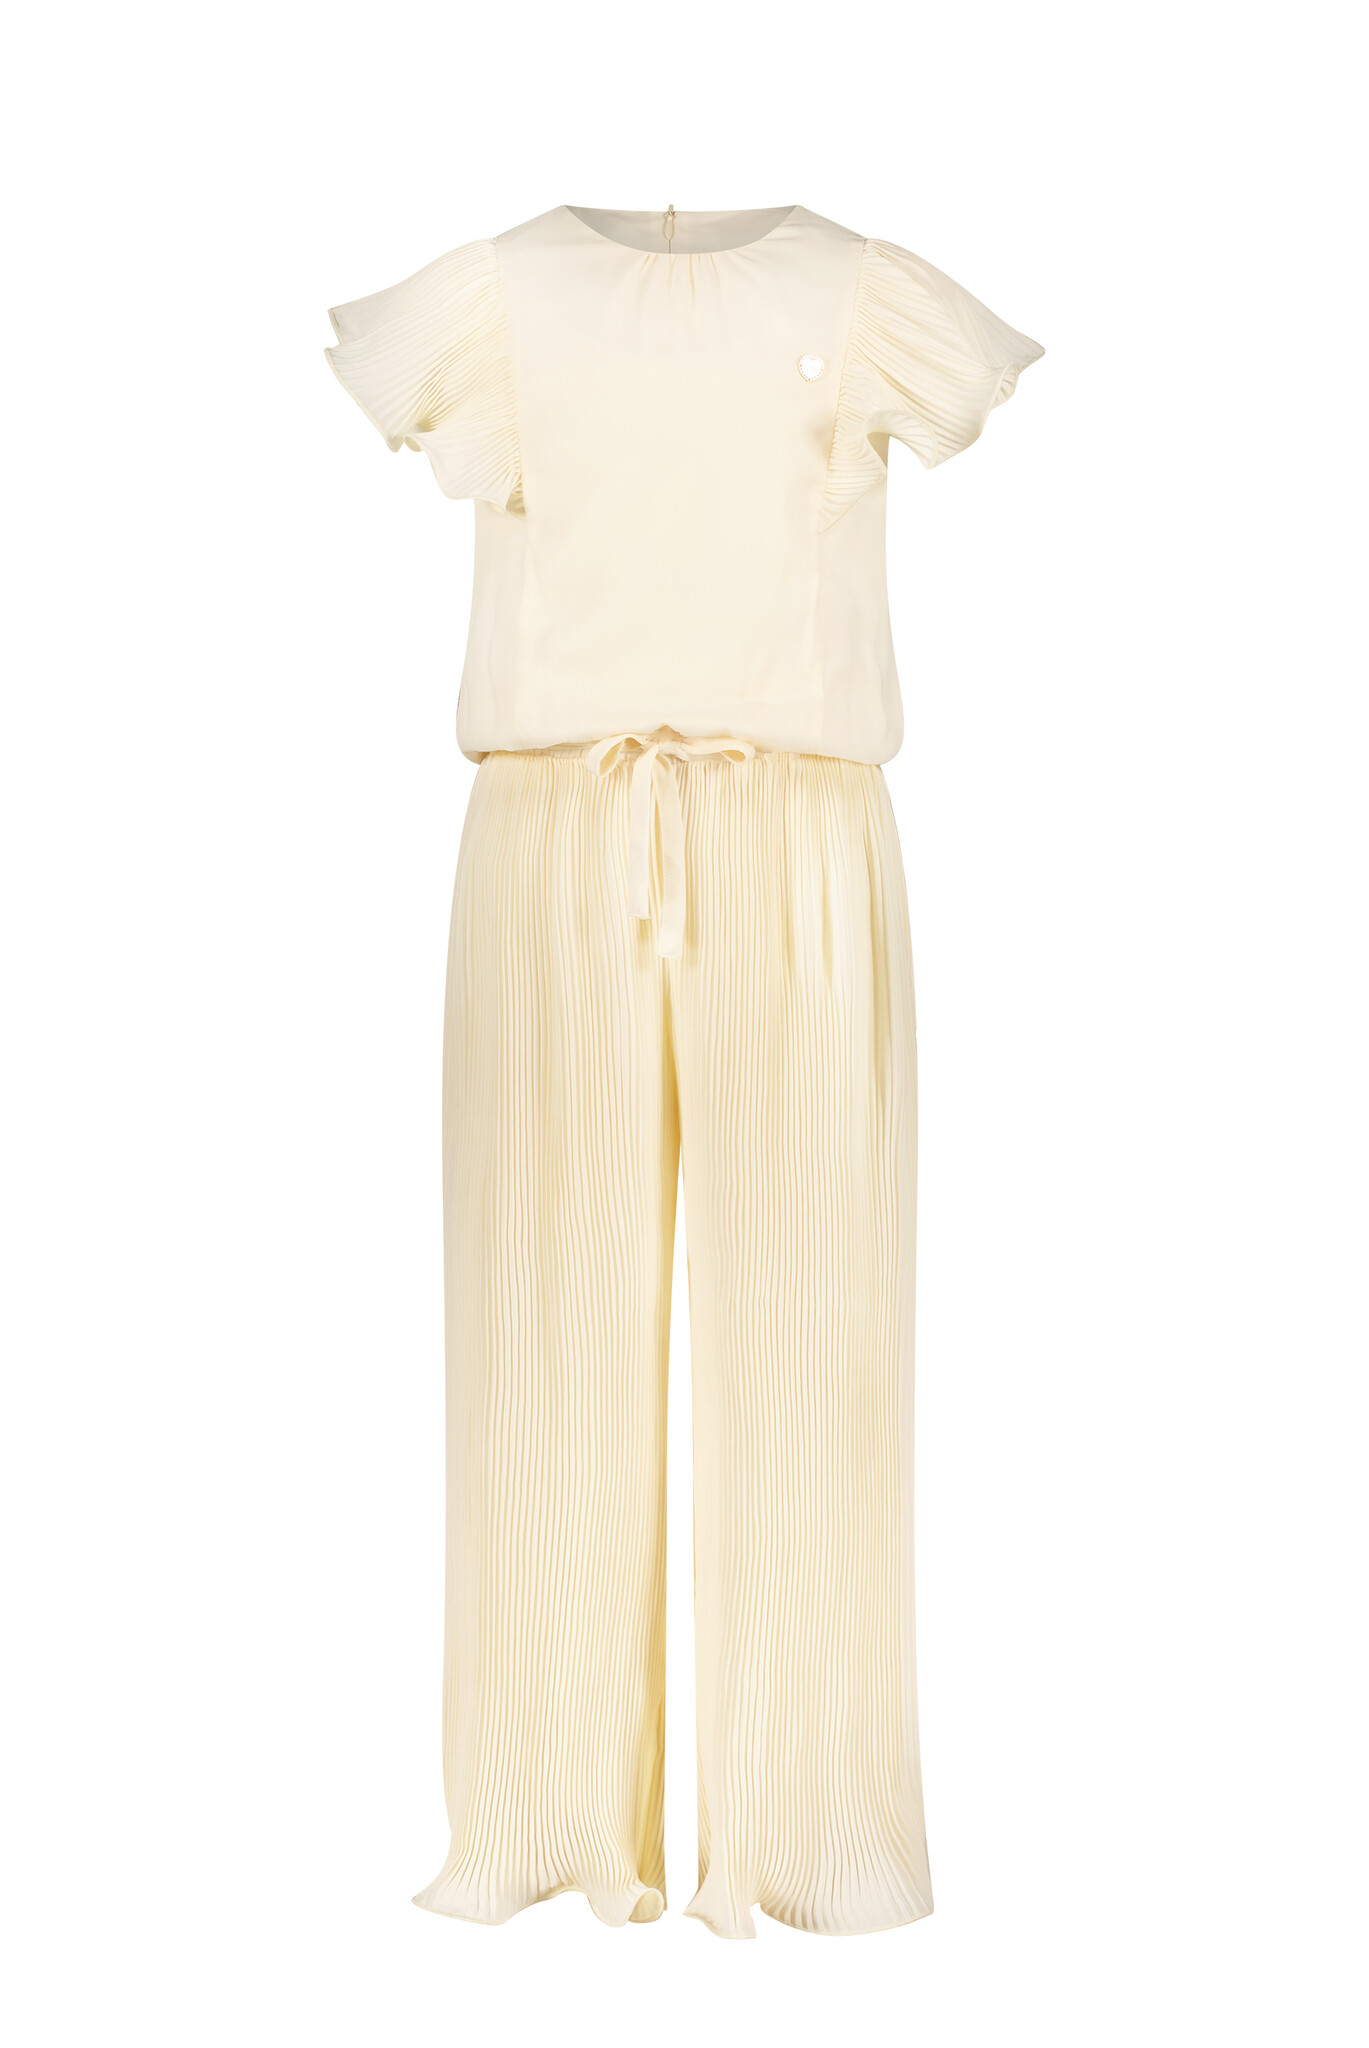 Le Chic C312-5631 Meisjes Jumpsuit - Pearled Ivory - Maat 152